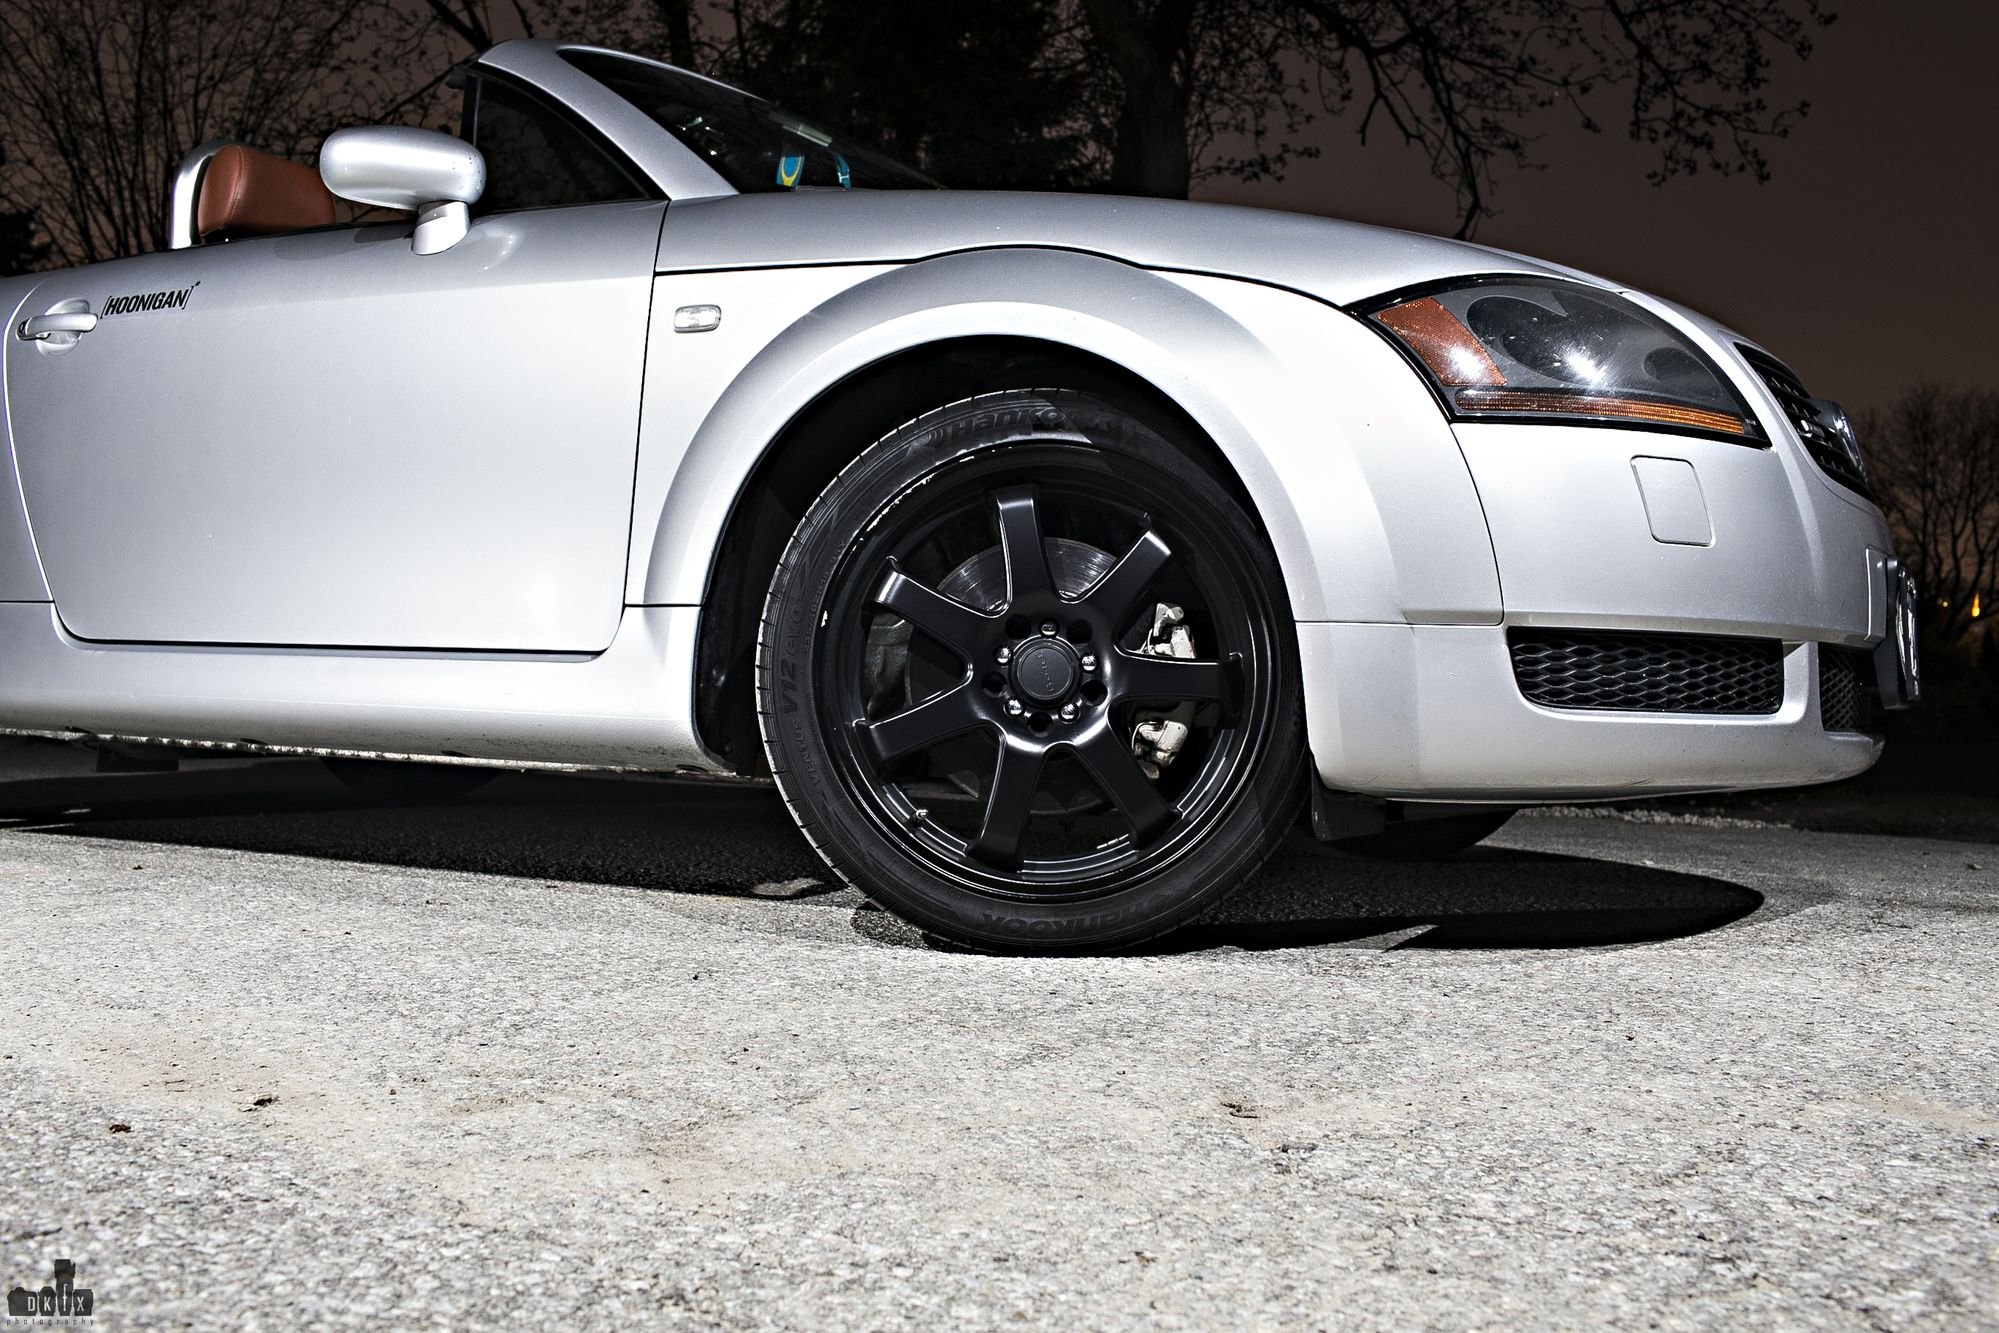 Silver Convertible Audi TT on Hankook Tires - Photo by dan kinzie